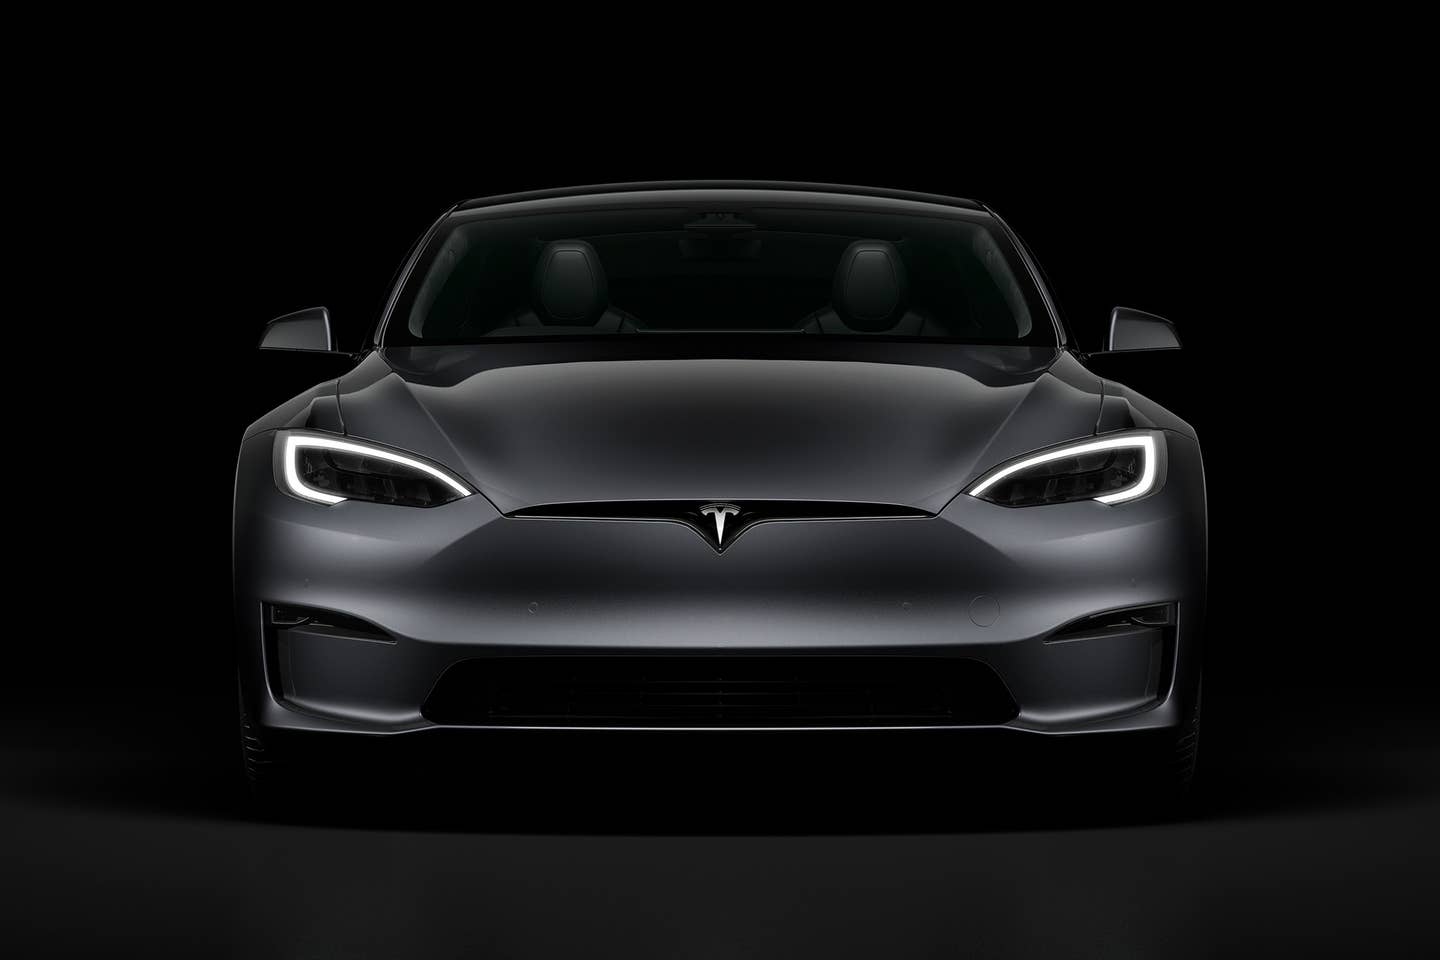 A Tesla Model S